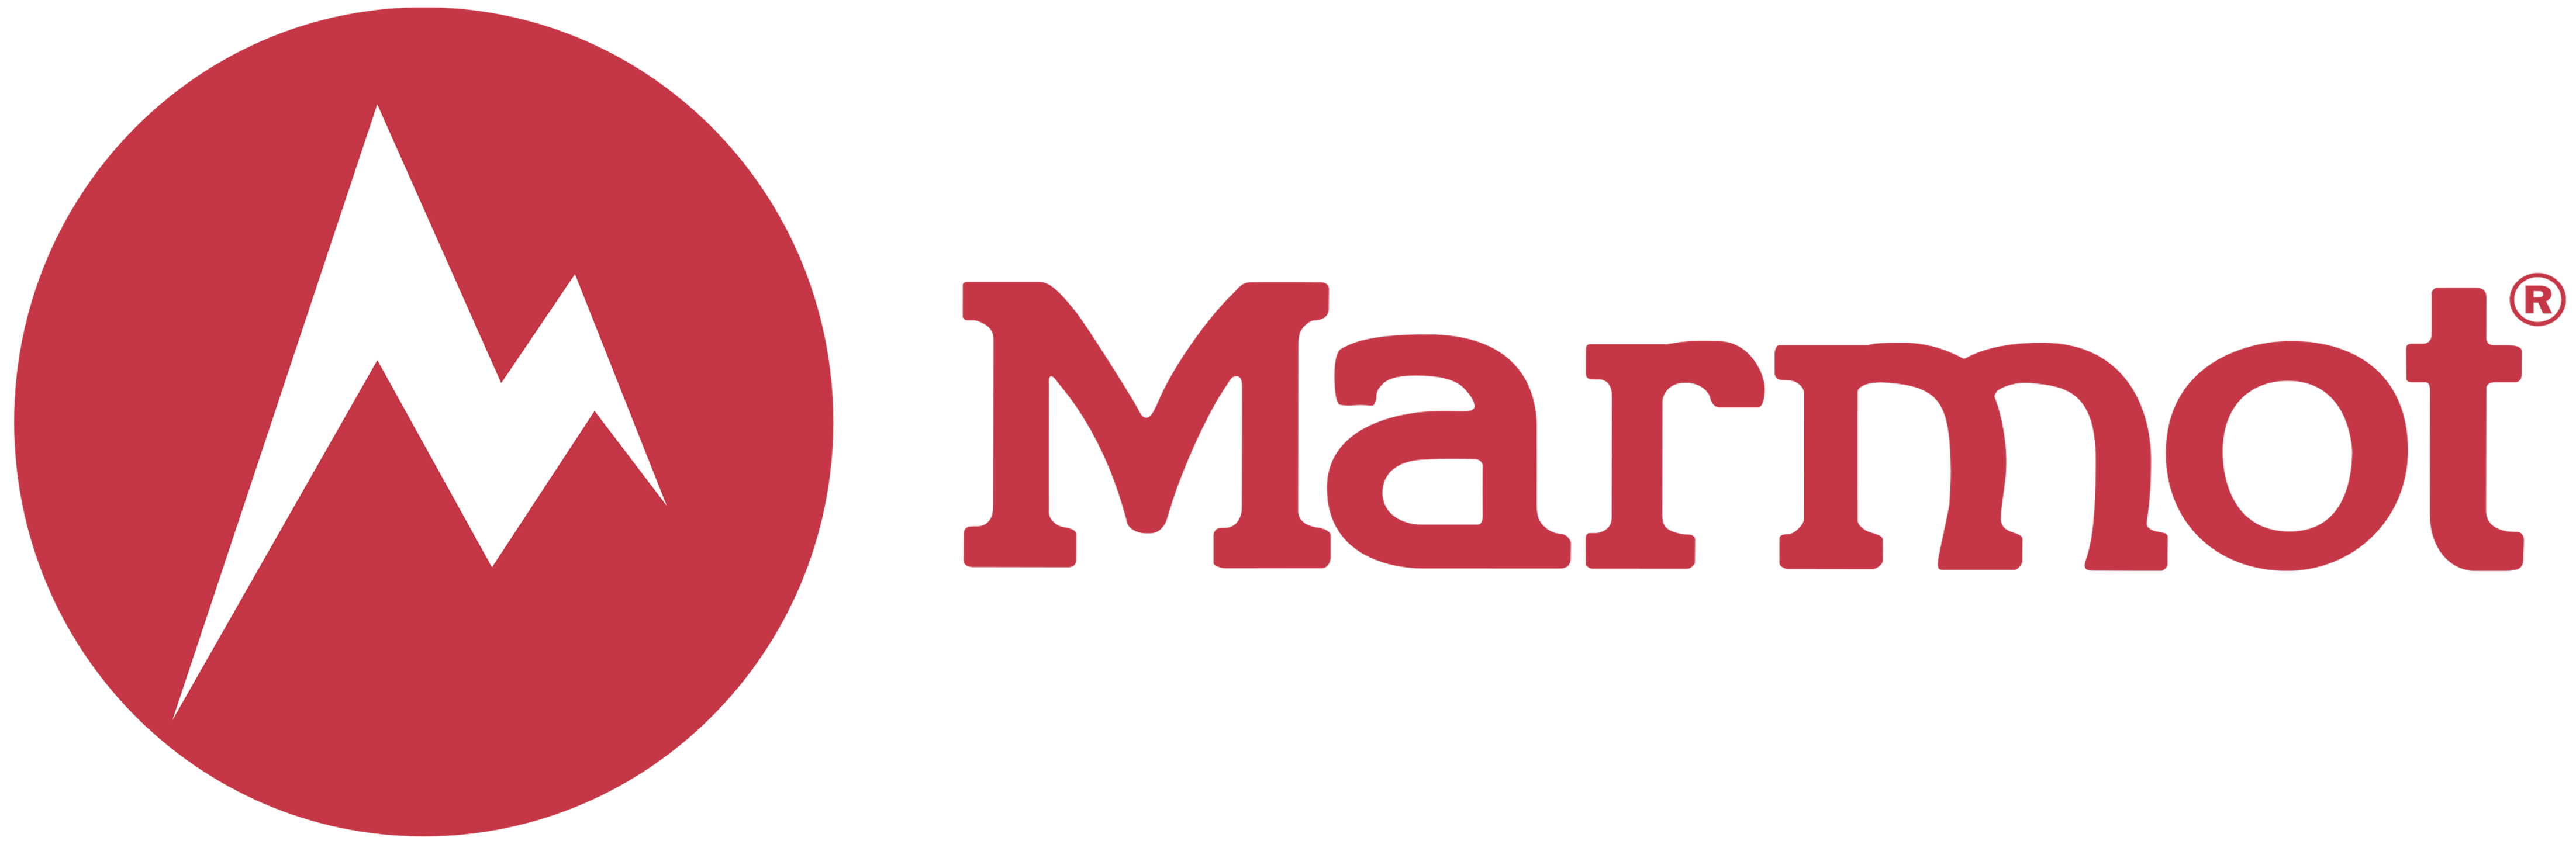 Marmot Logo - Blog Announcements Marmot Instagram Giveaway!